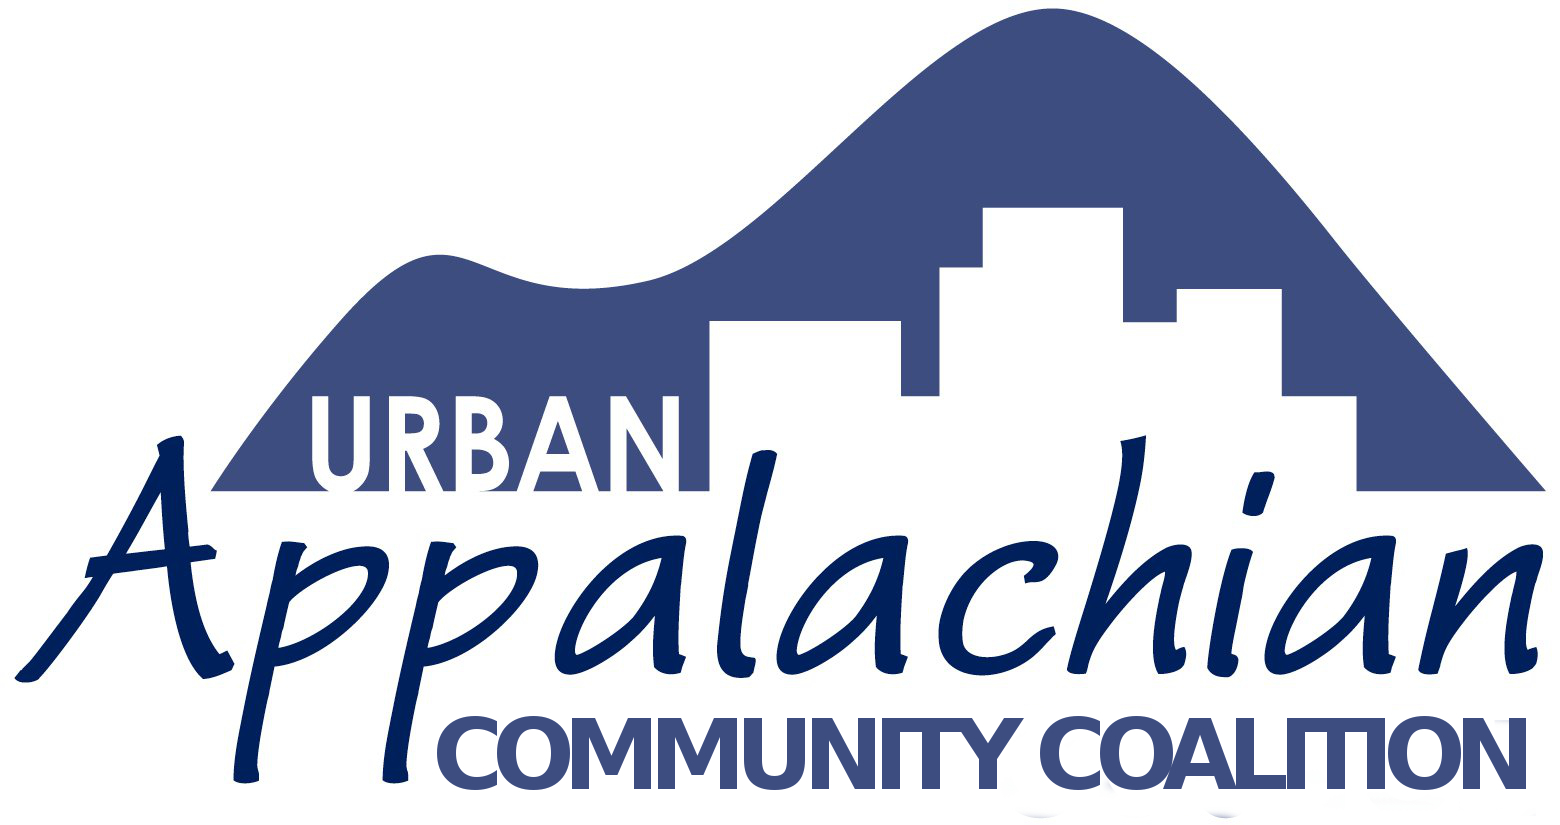 Urban Appalachian Community Coalition